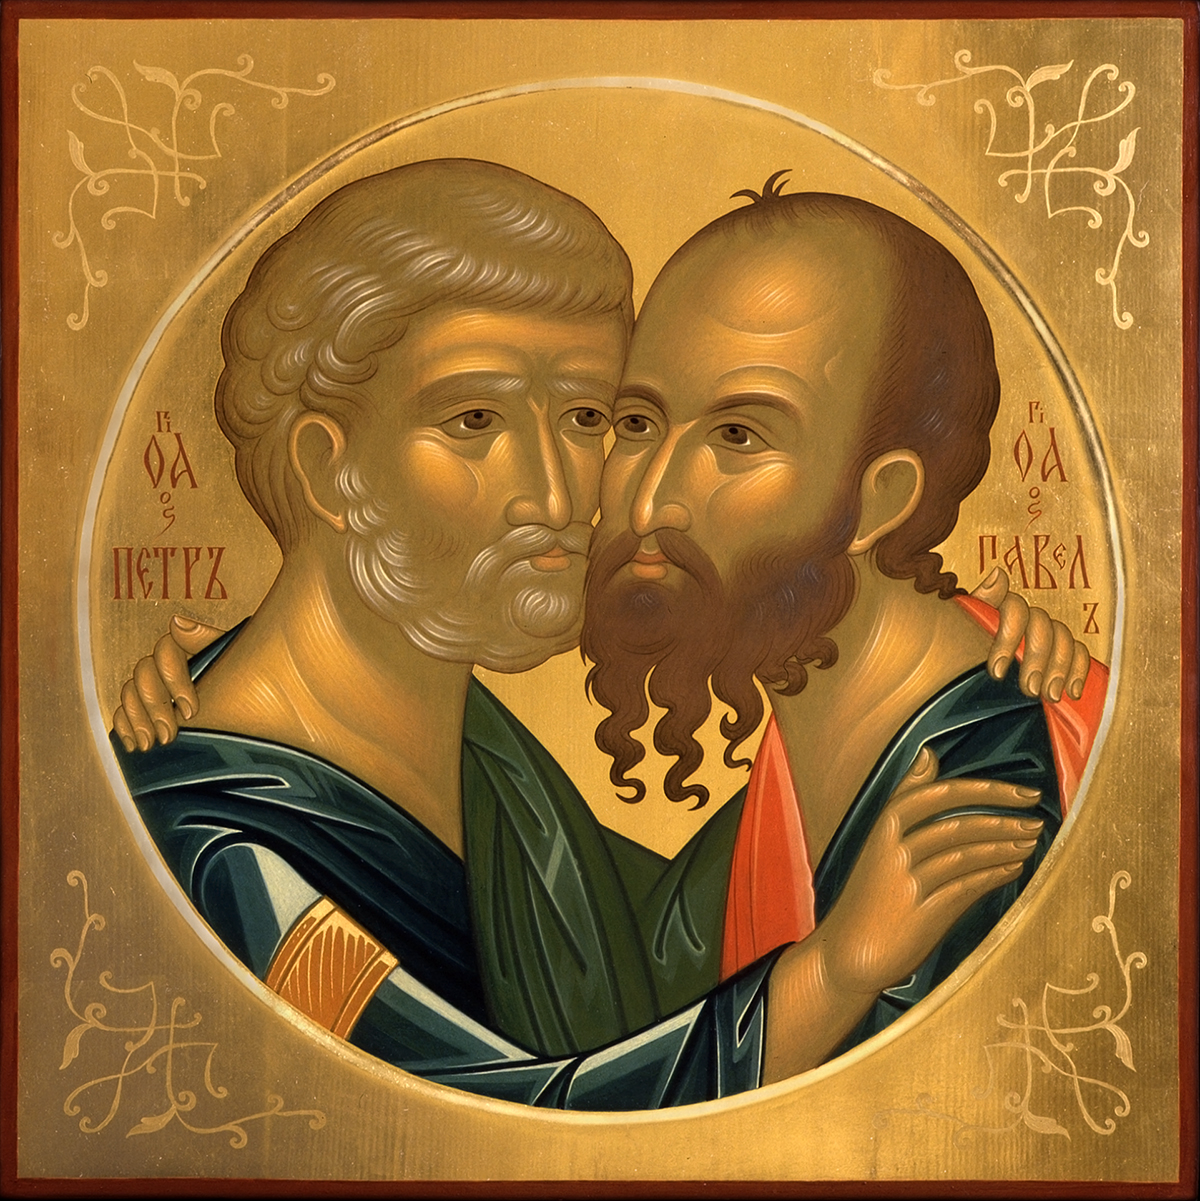 saint peter pavel holy Icon Orthodox art handmade apostles апостолы Петр и Павел святой икона православный церковное искусство